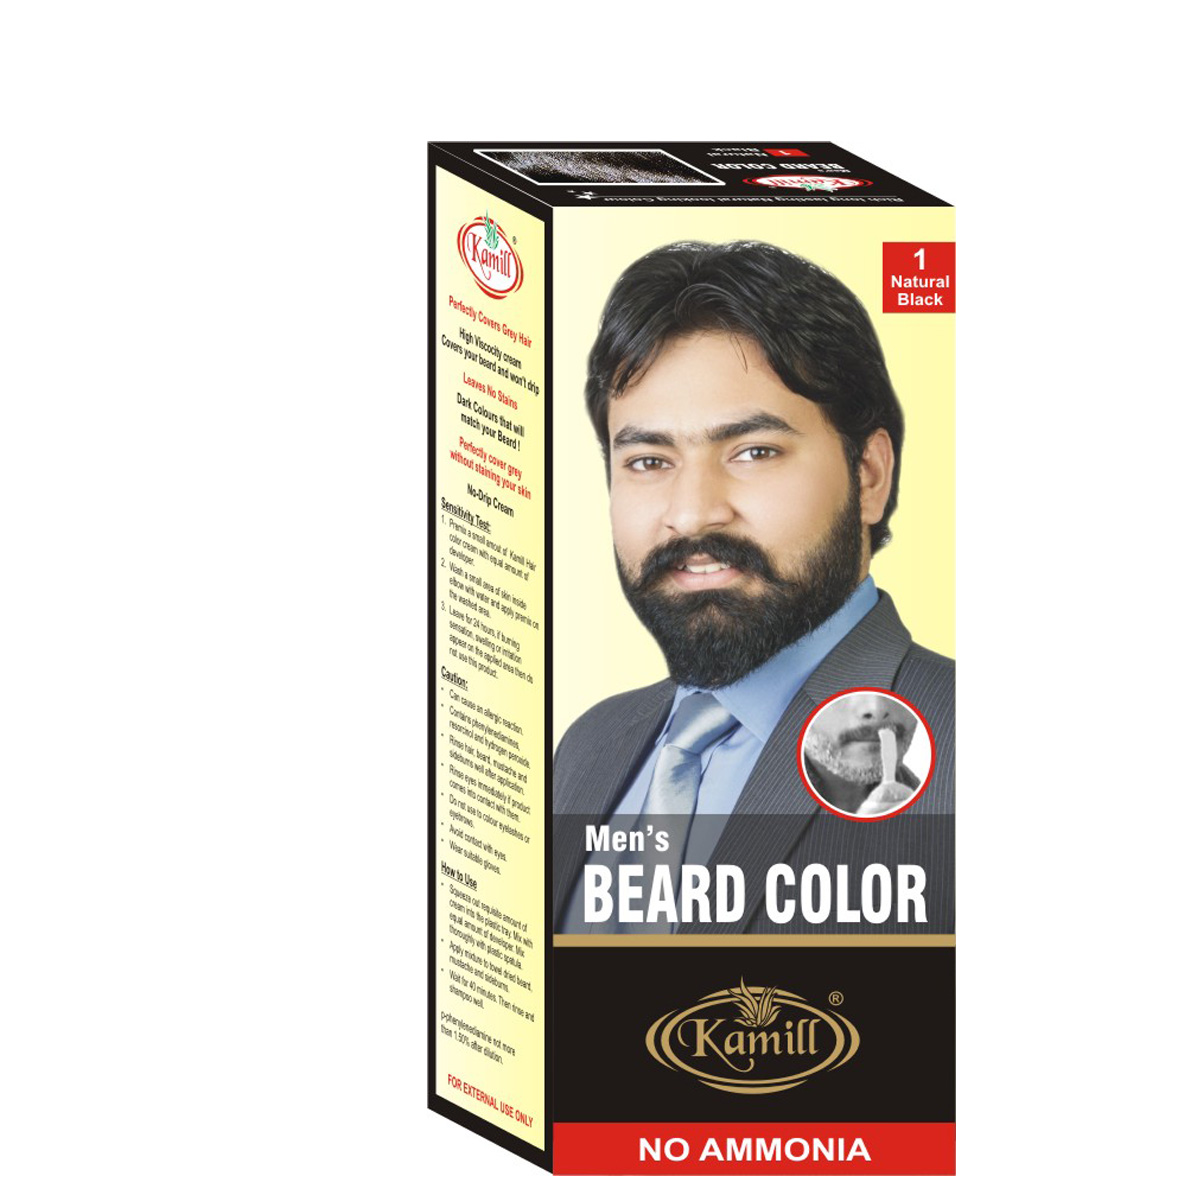 Kamill Best Natural Beard Colour for Men India